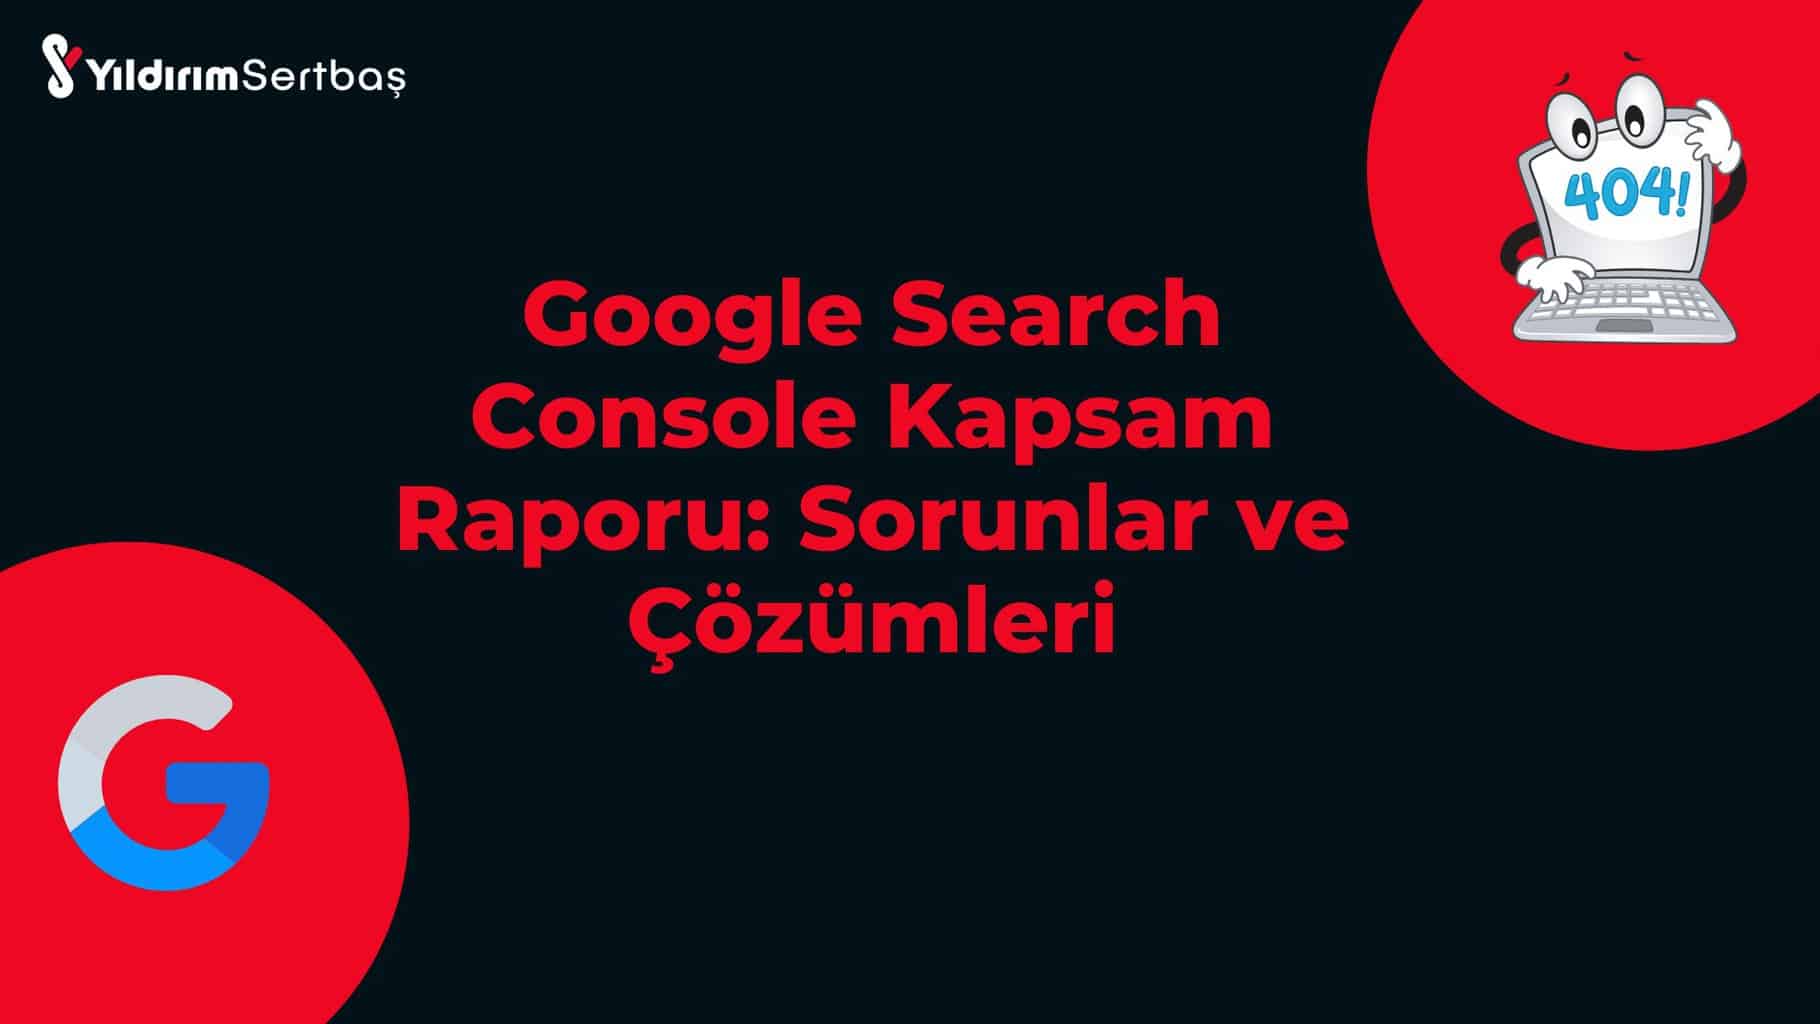 Google Search Console Kapsam Raporu